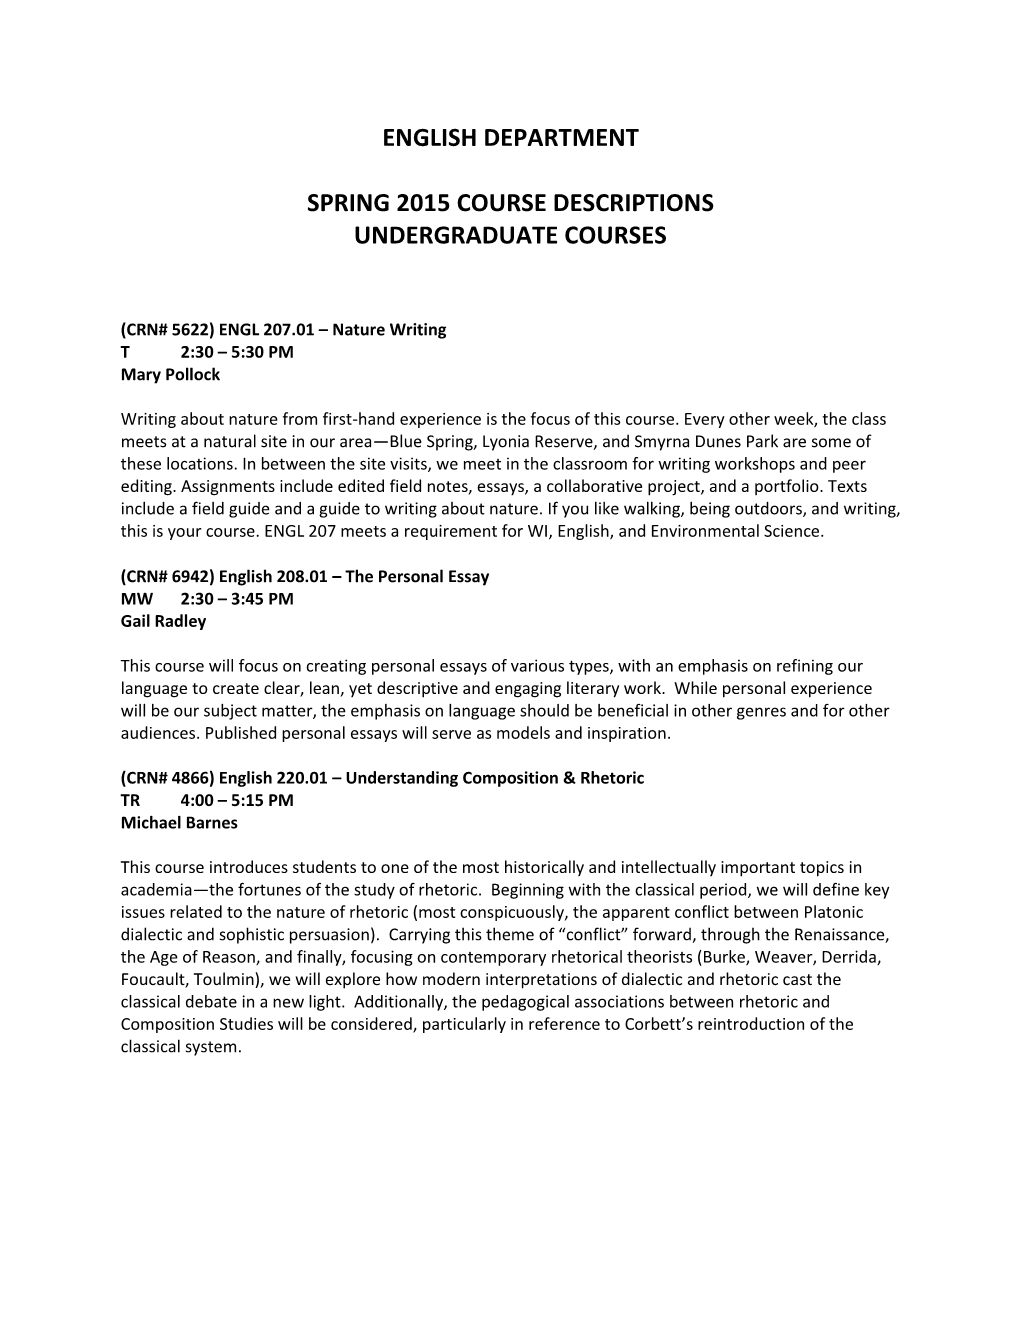 English Department Spring 2015 Course Descriptions